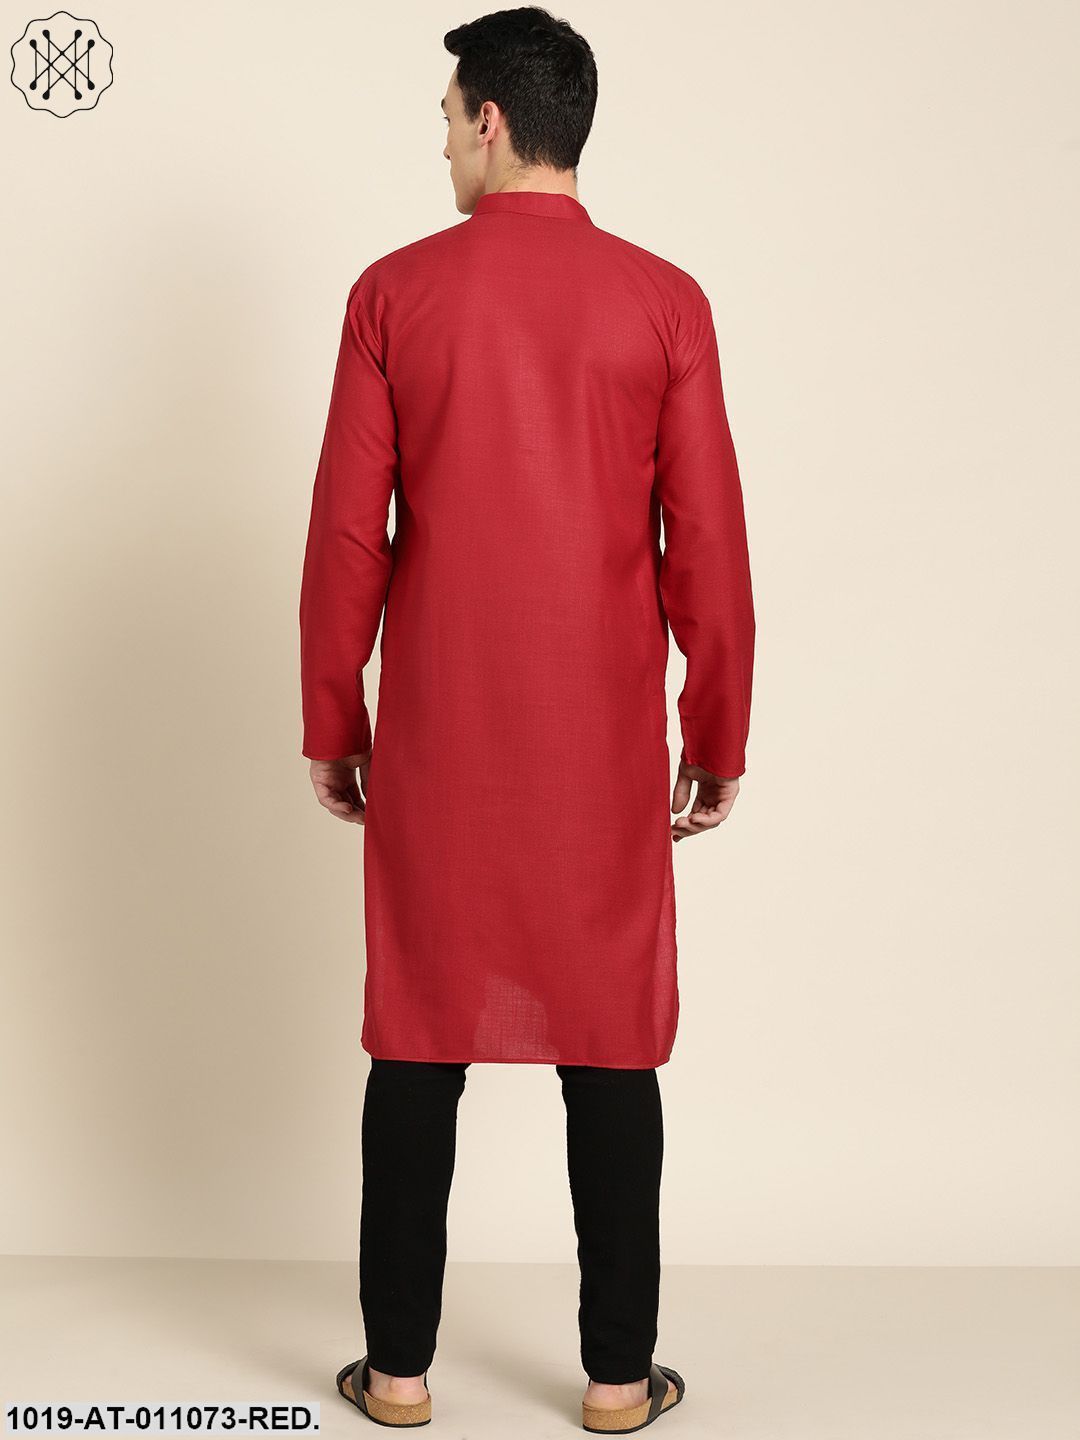 Men's Cotton Red Solid Only Kurta - Sojanya